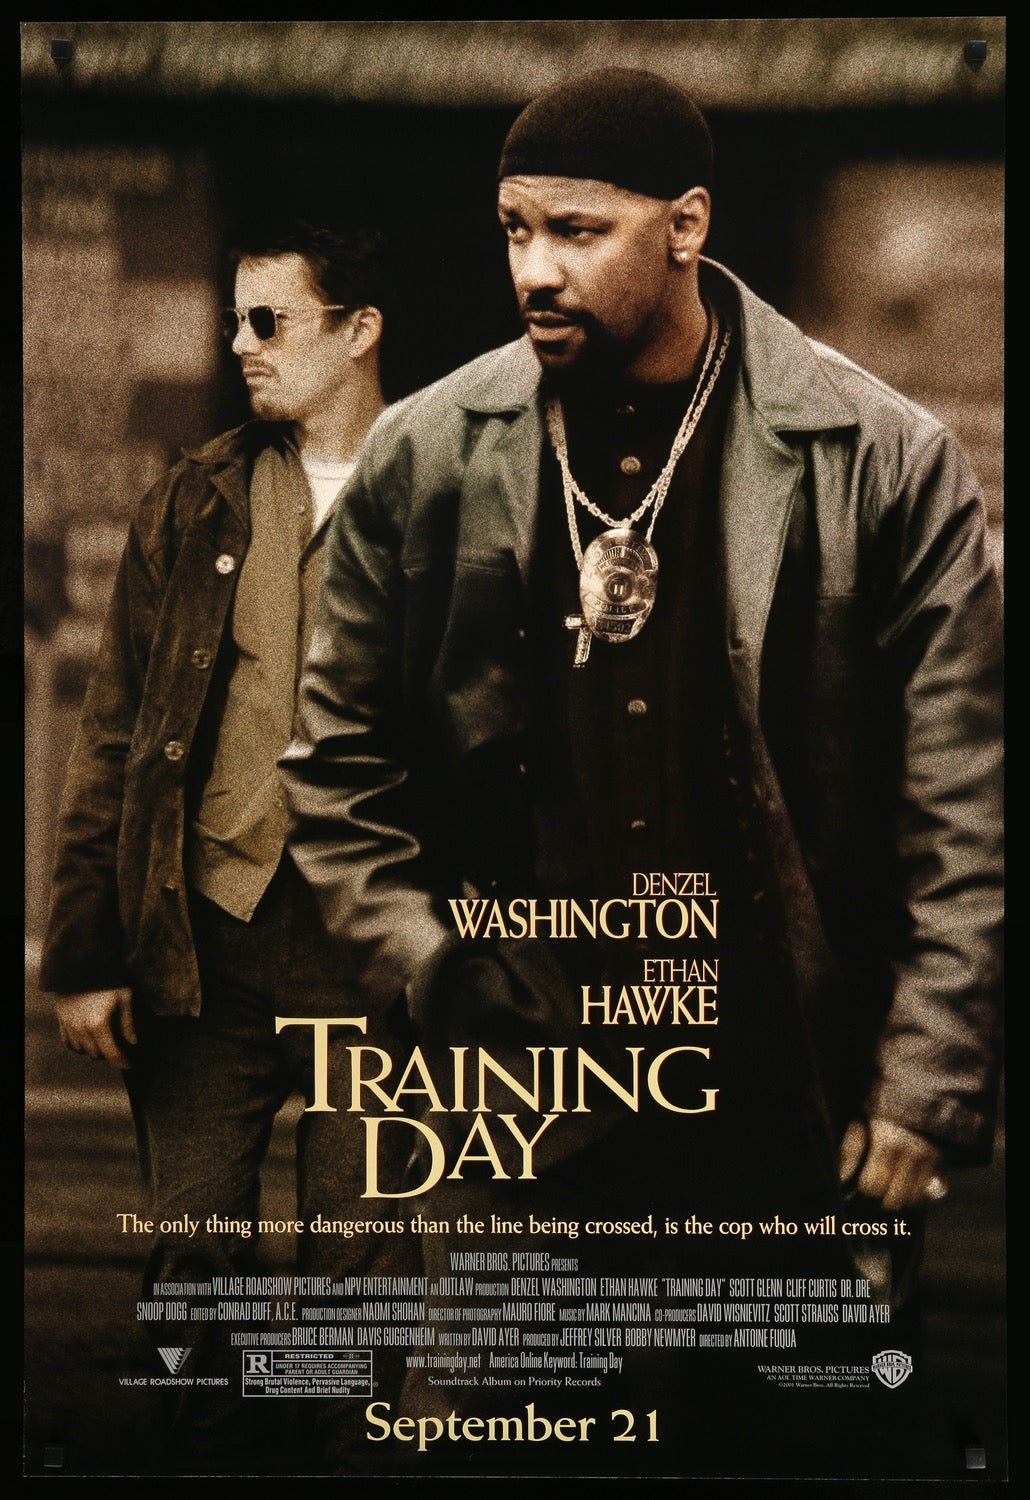 Training Day (2001) original movie poster for sale at Original Film Art